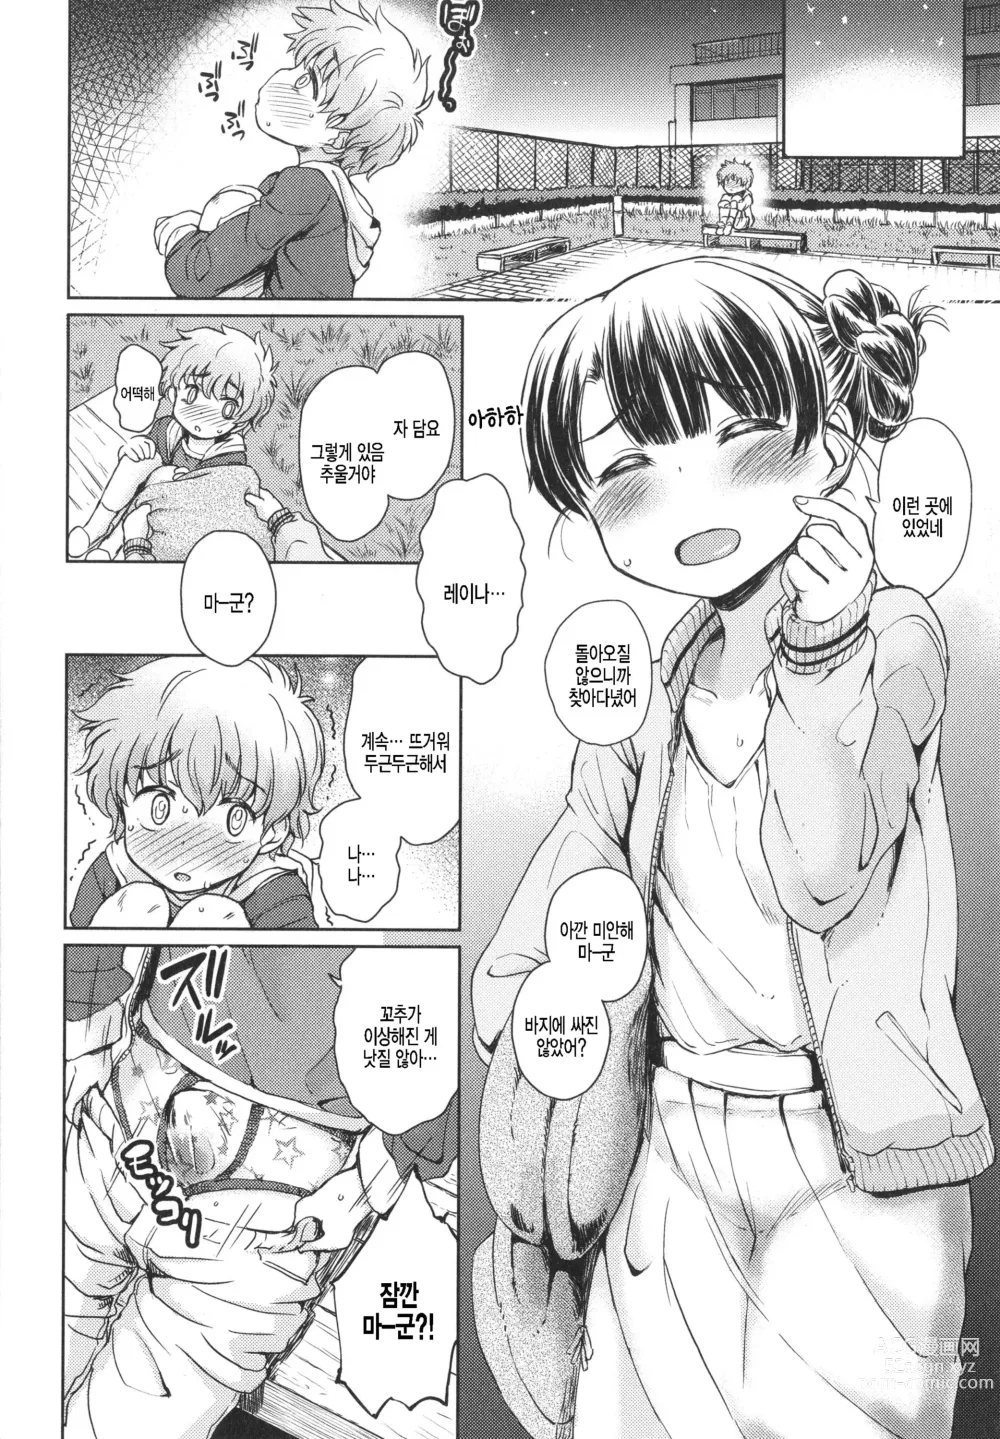 Page 4 of manga Dokidoki no Naoshikata